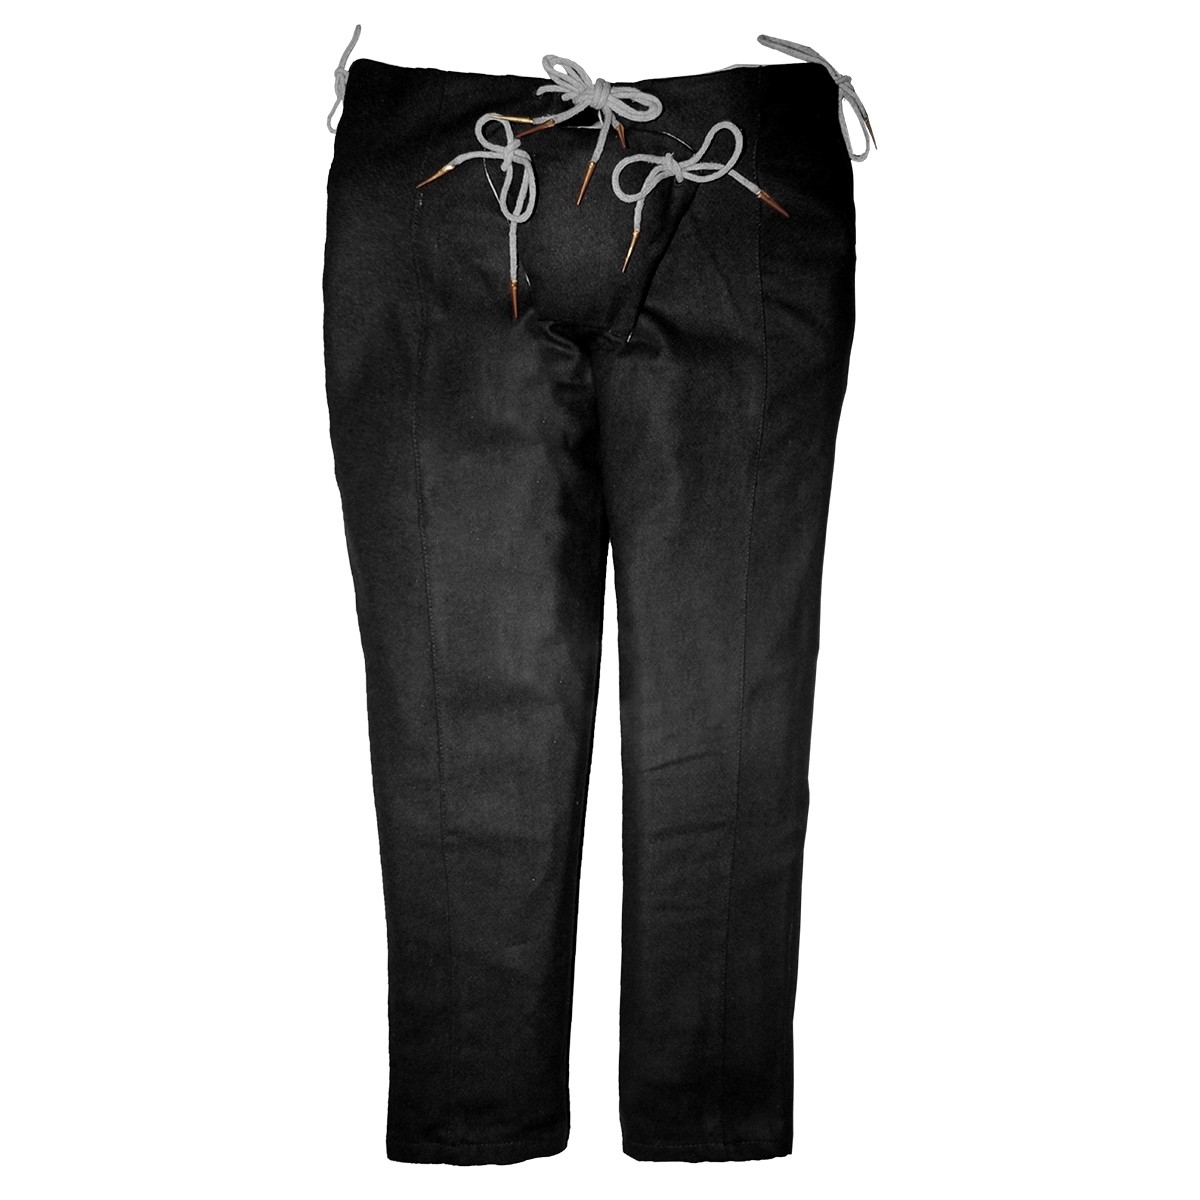 Man's 15th C. Trousers -Black